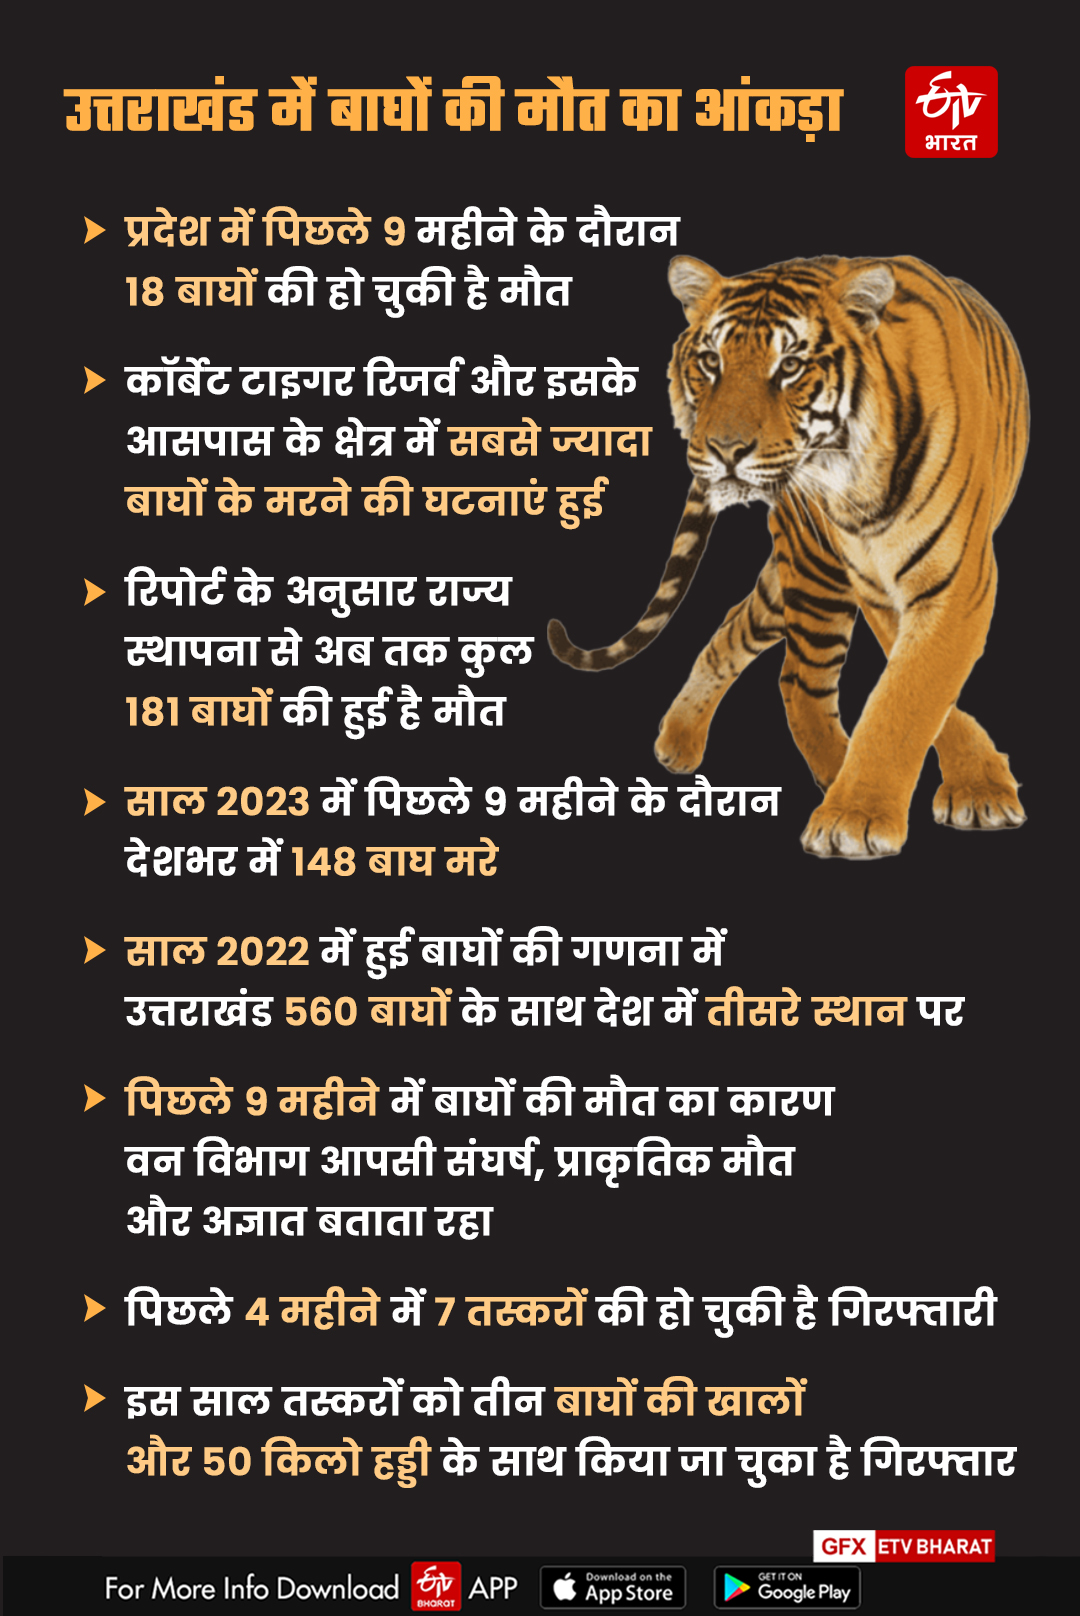 Tiger death cases in Uttarakhand